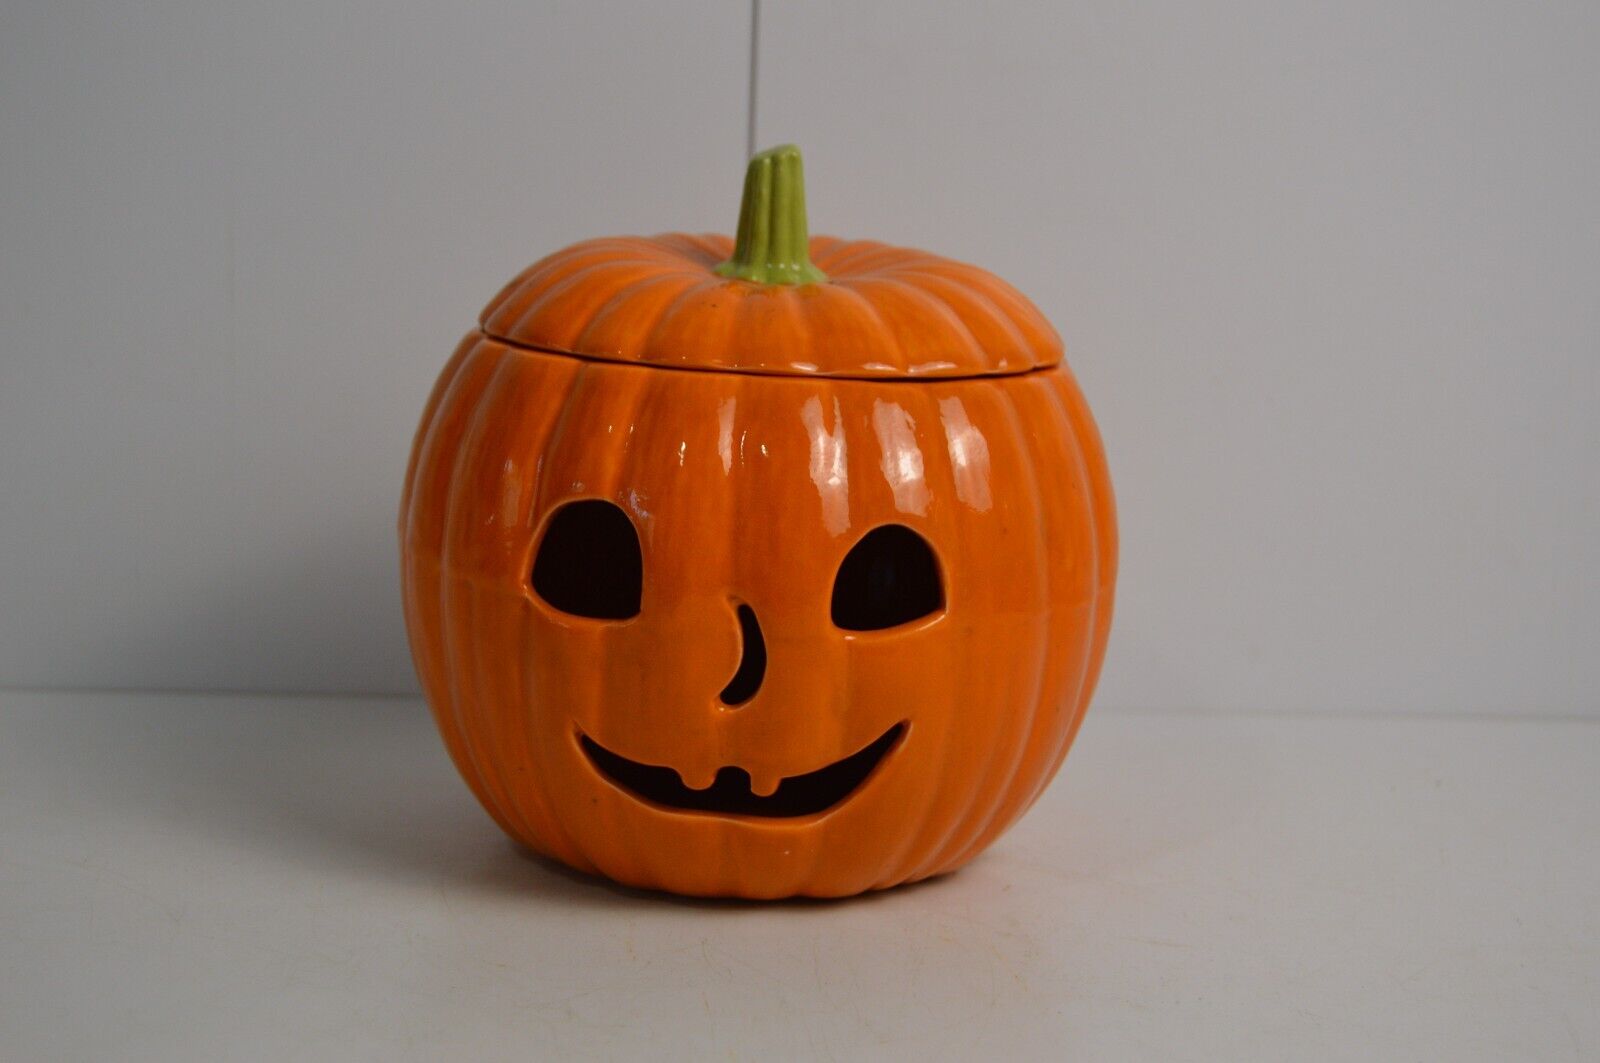 Vintage Jack O Lantern Halloween Pumpkin Ceramic Collectible Home Decor